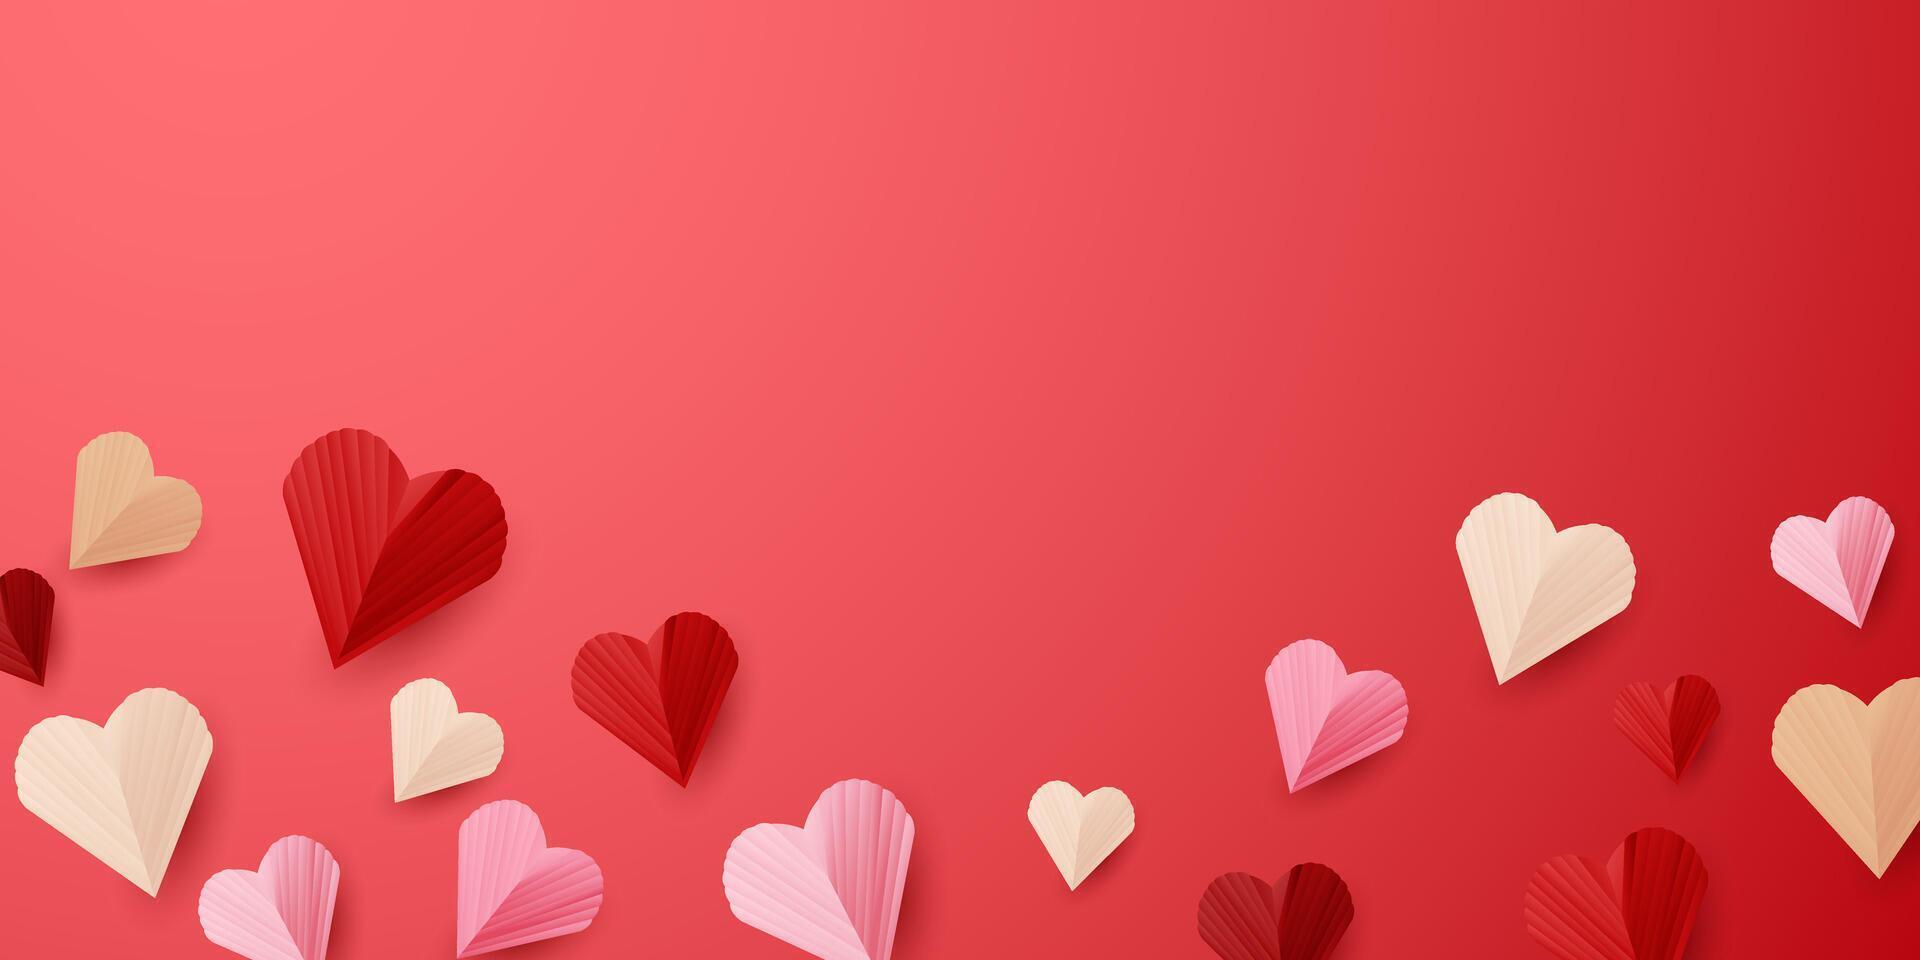 contento San Valentín día póster o vale diseño. con corazón globos en un hermosa fondo, vector ilustración